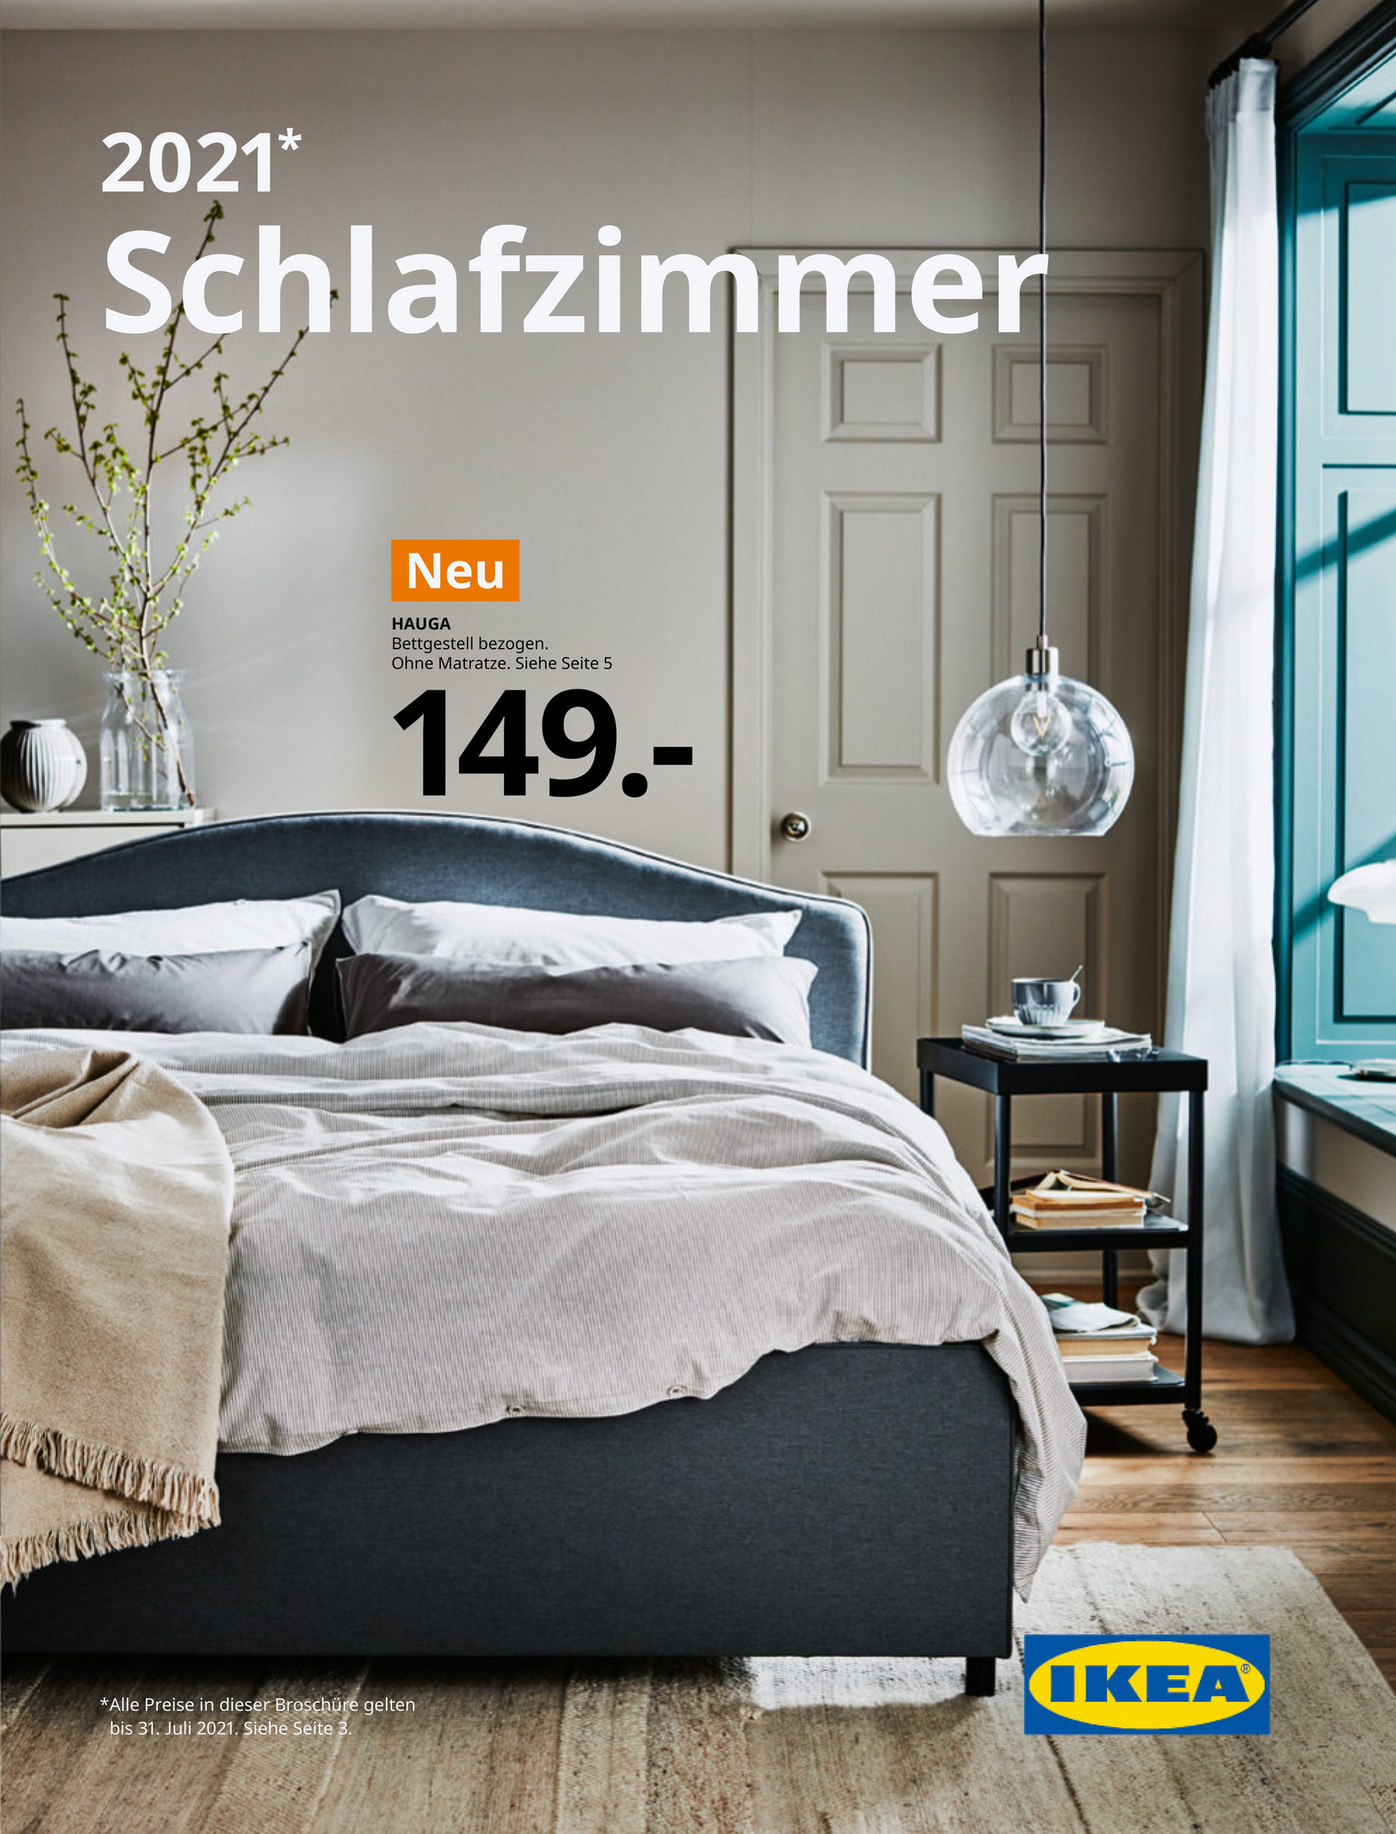 Schlafzimmer Bett Ikea Design